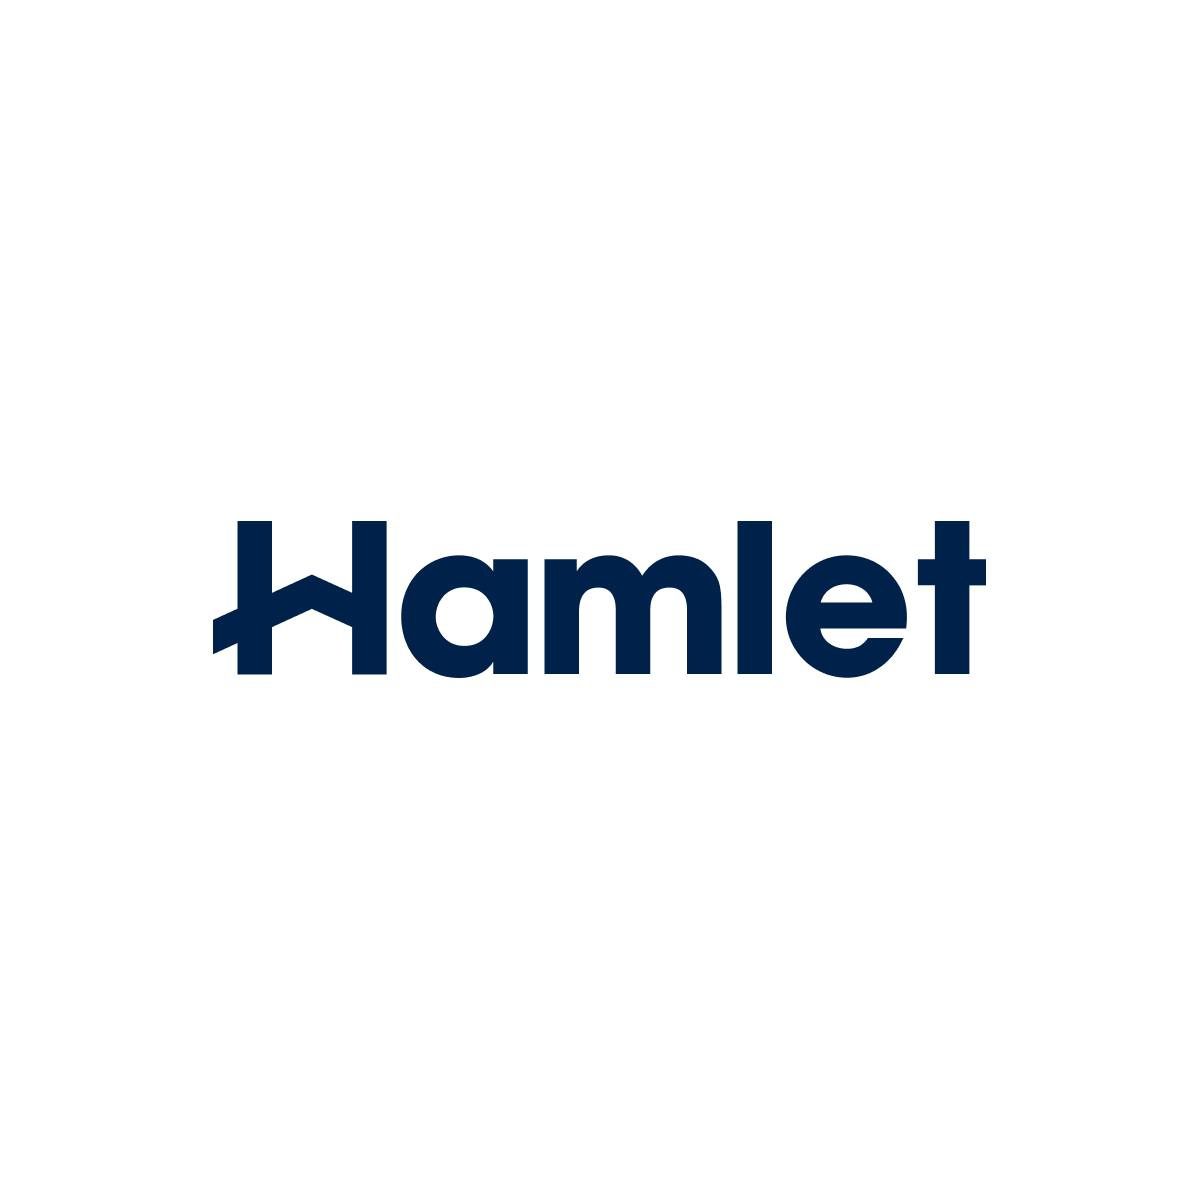 Hamlet | San Rafael California: Local Info, schools, real estate, government & more